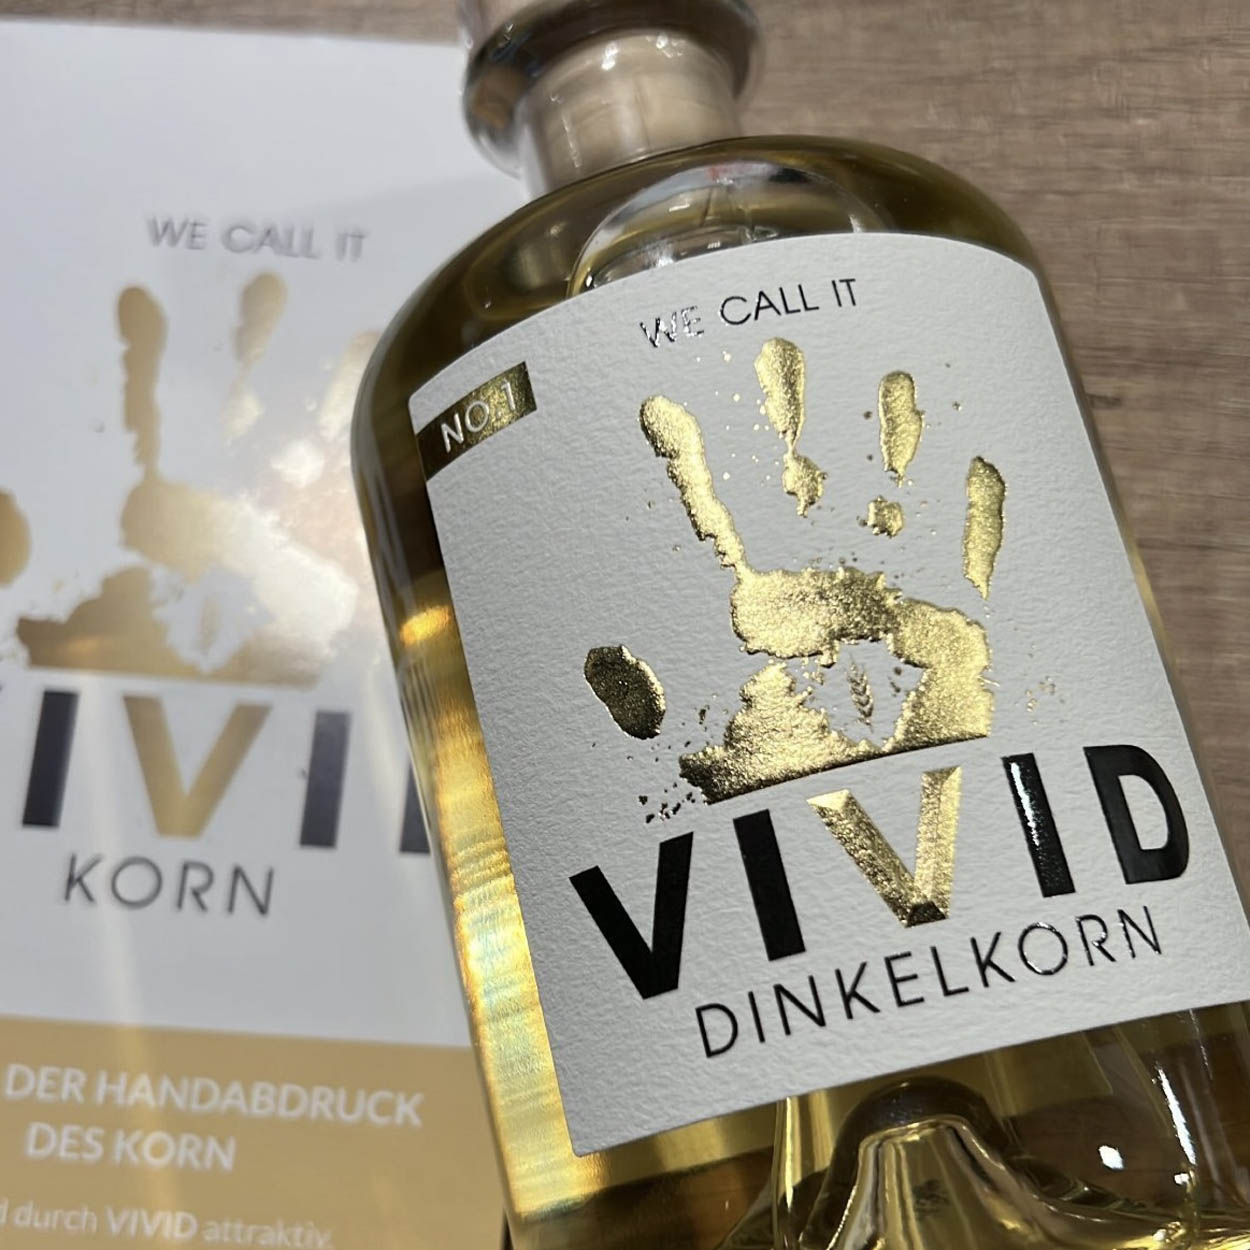 VIVID Dinkelkorn 0,5l (35% vol)